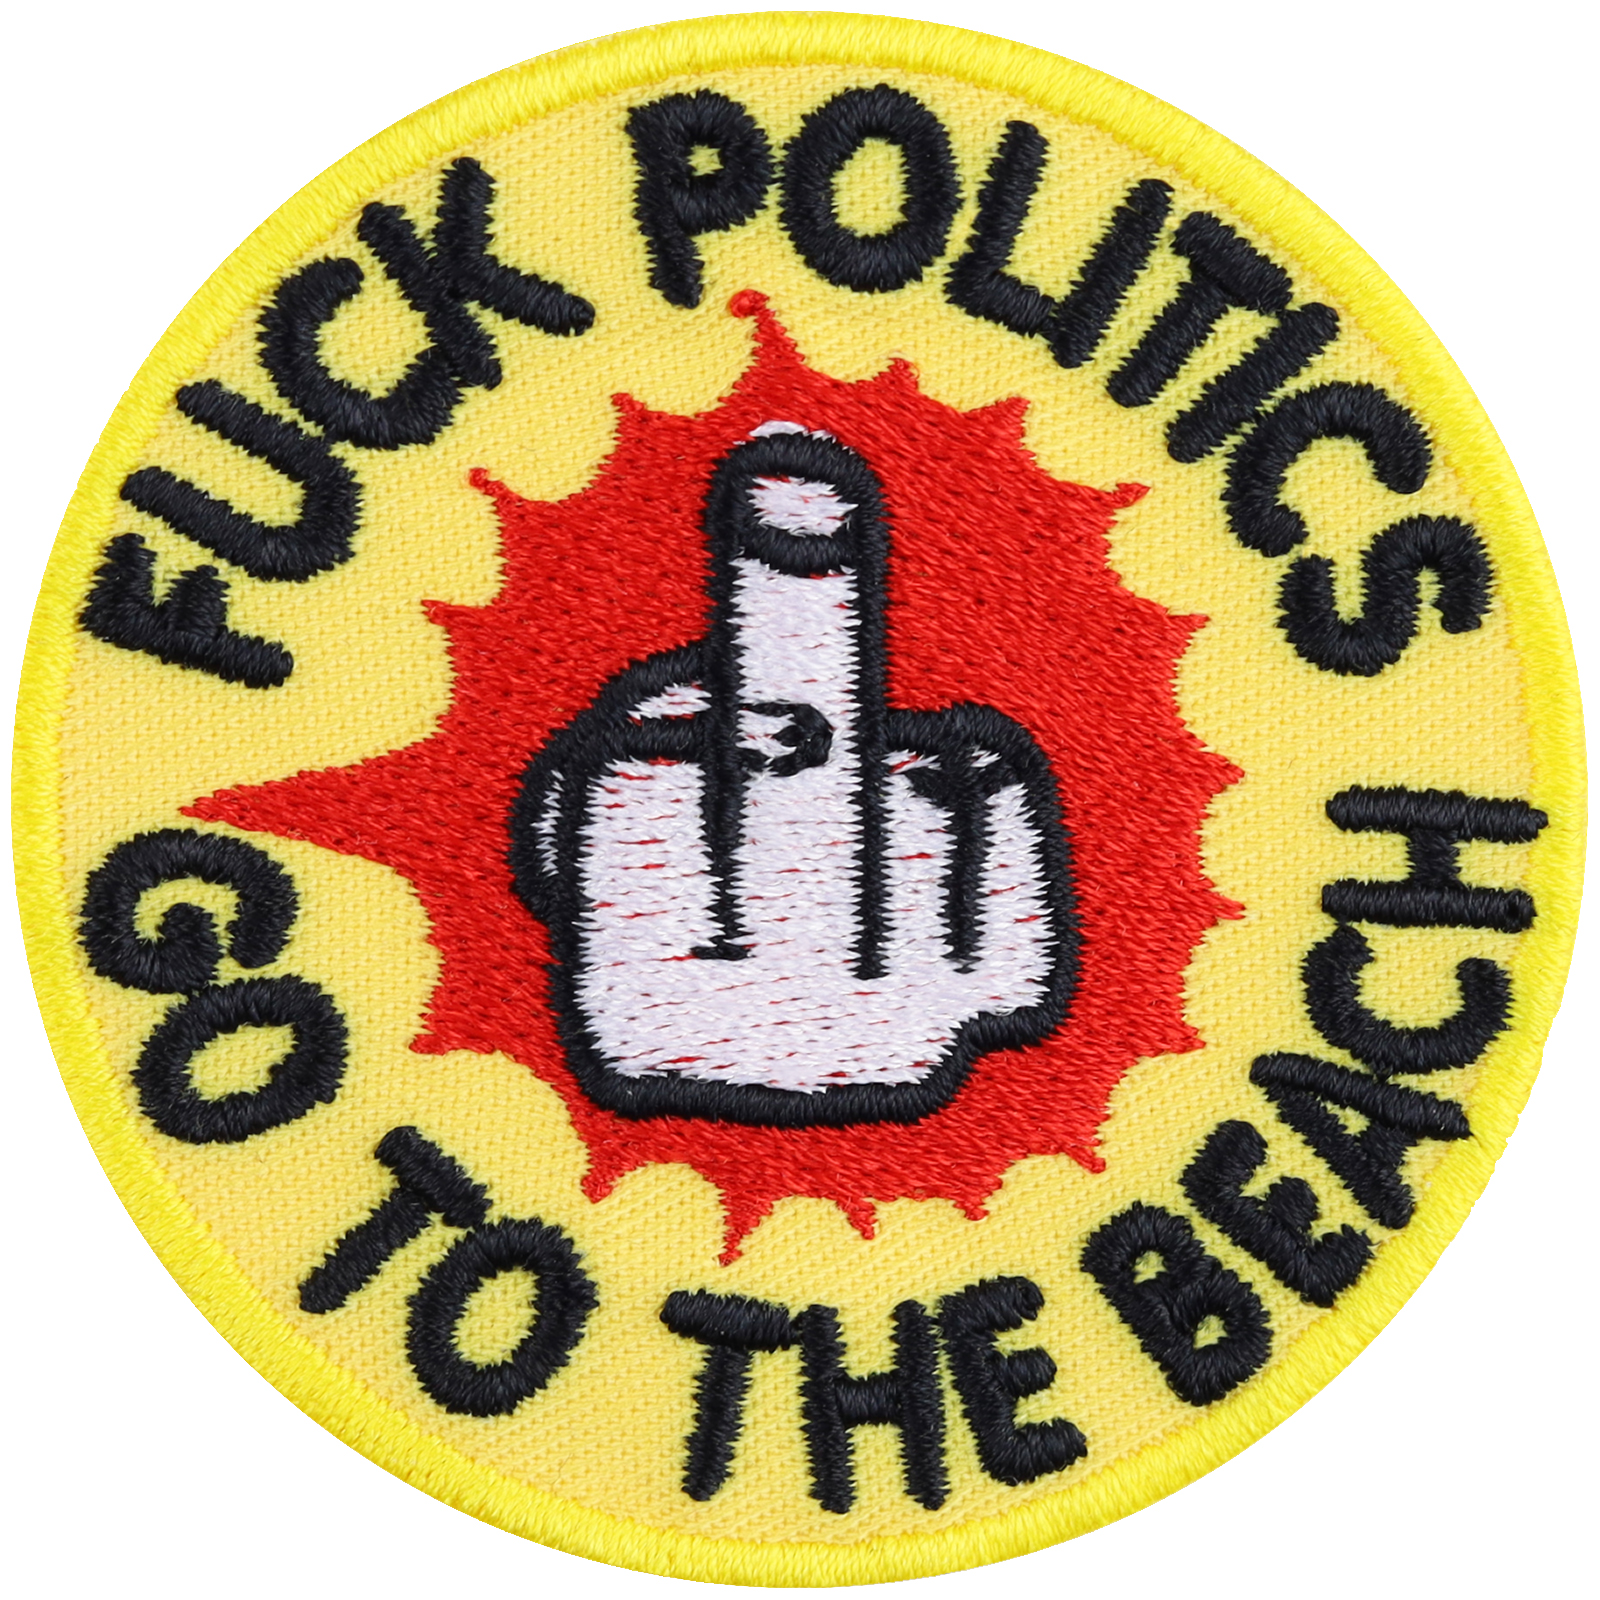 Fuck politics - go to the beach - Patch